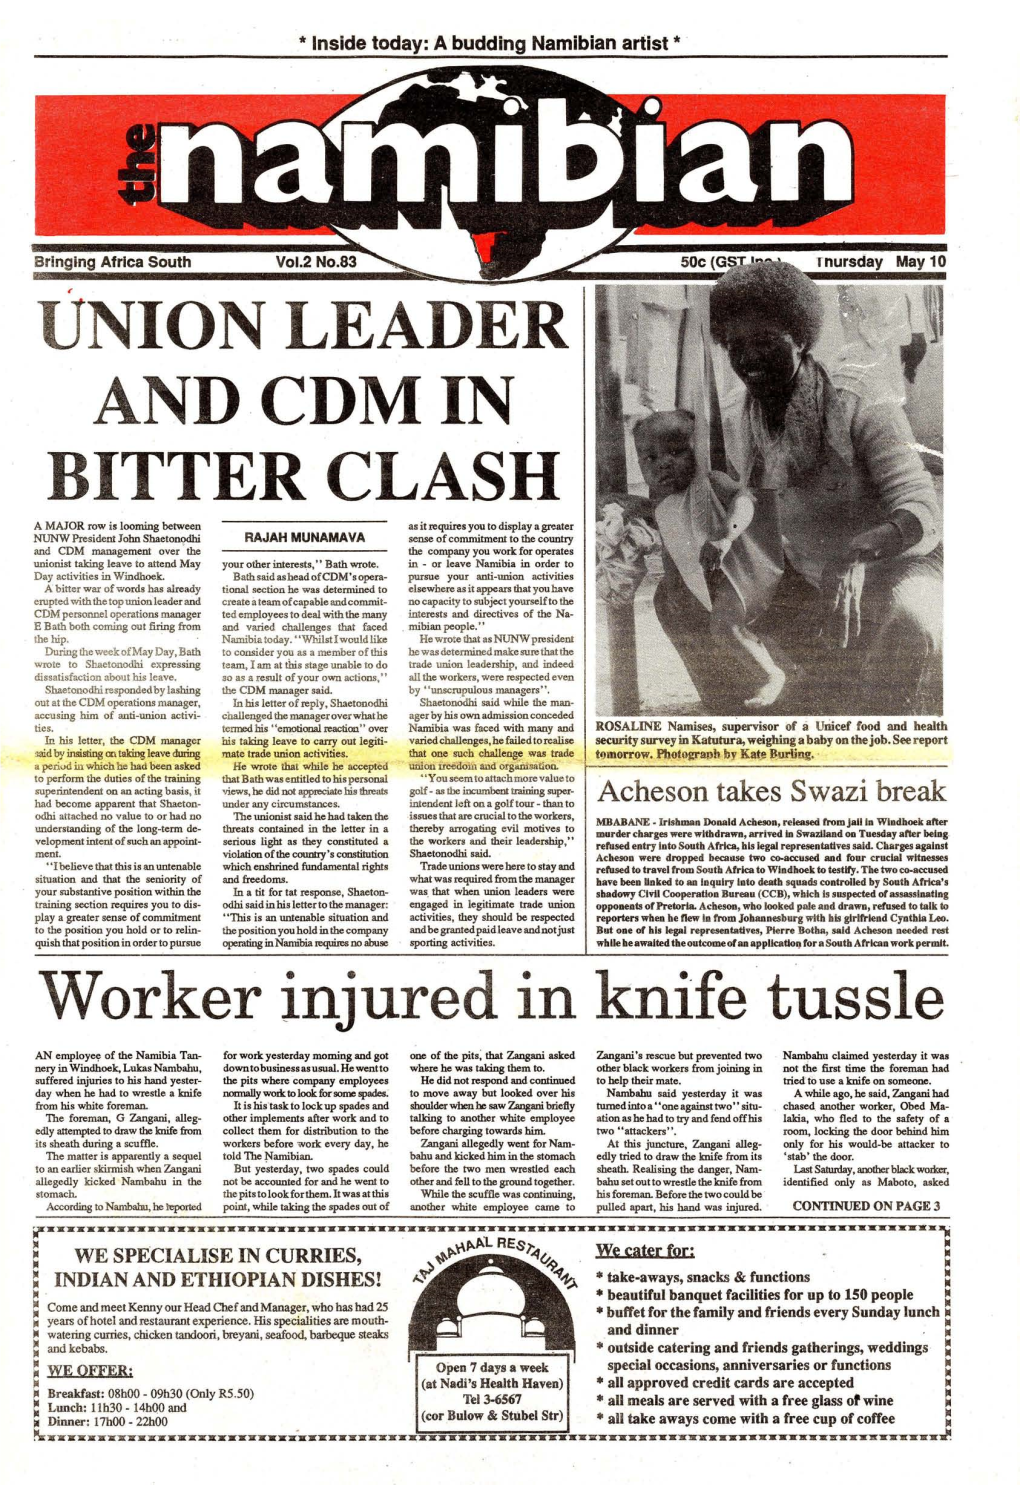 Union Leader Andcdmin Bitter Clash